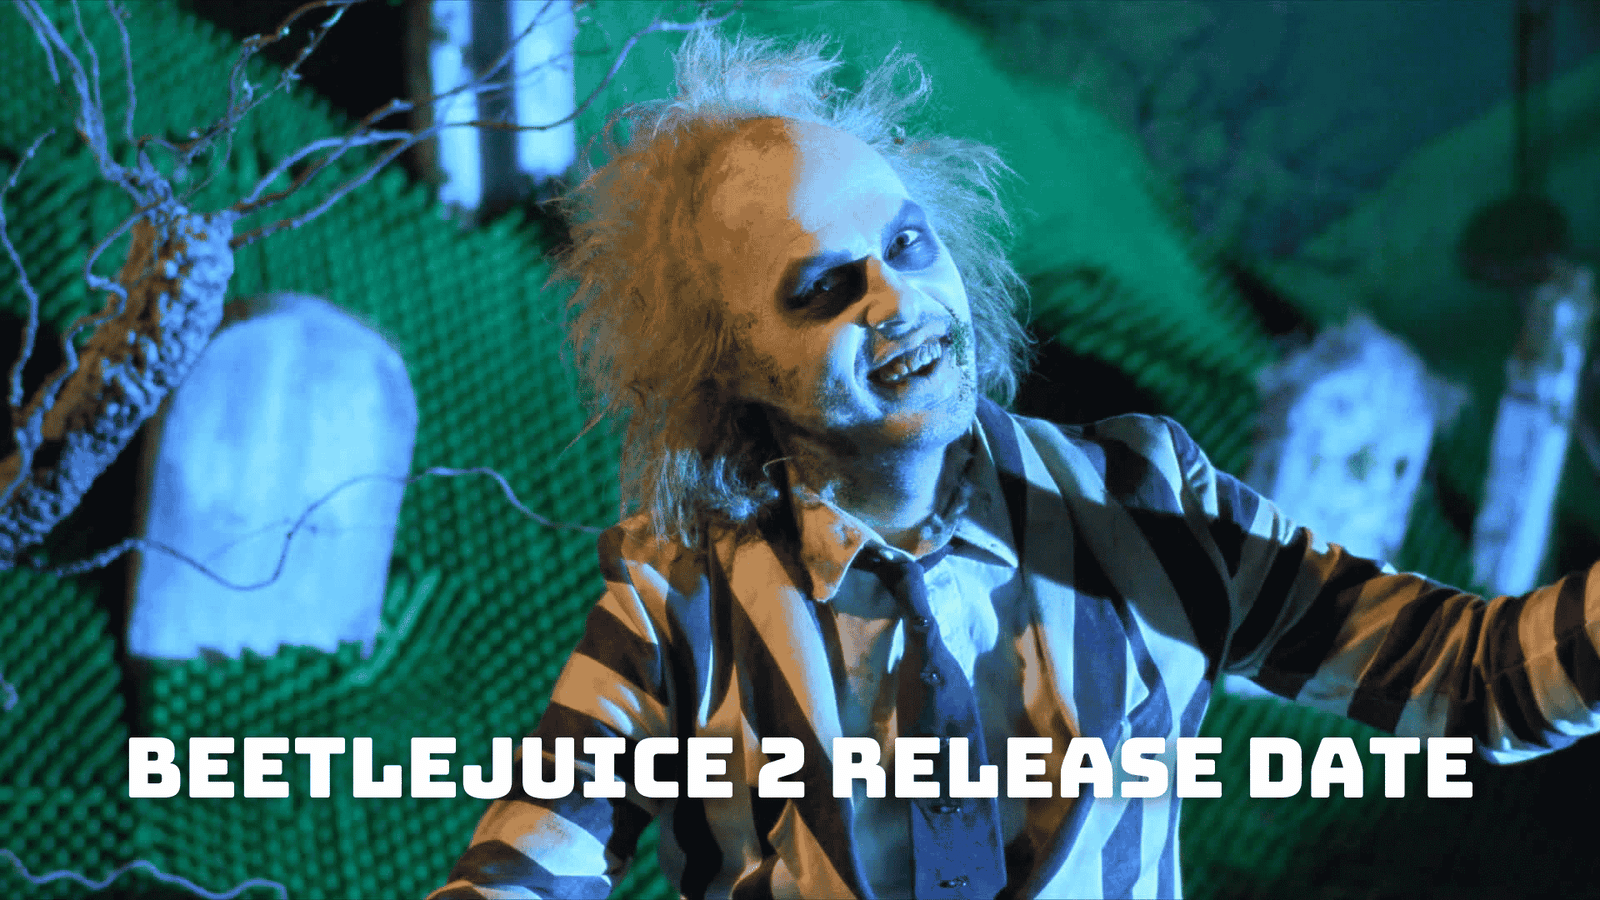 Beetlejuice 2 Release Date, Trailer - Will Johnny Depp Return?